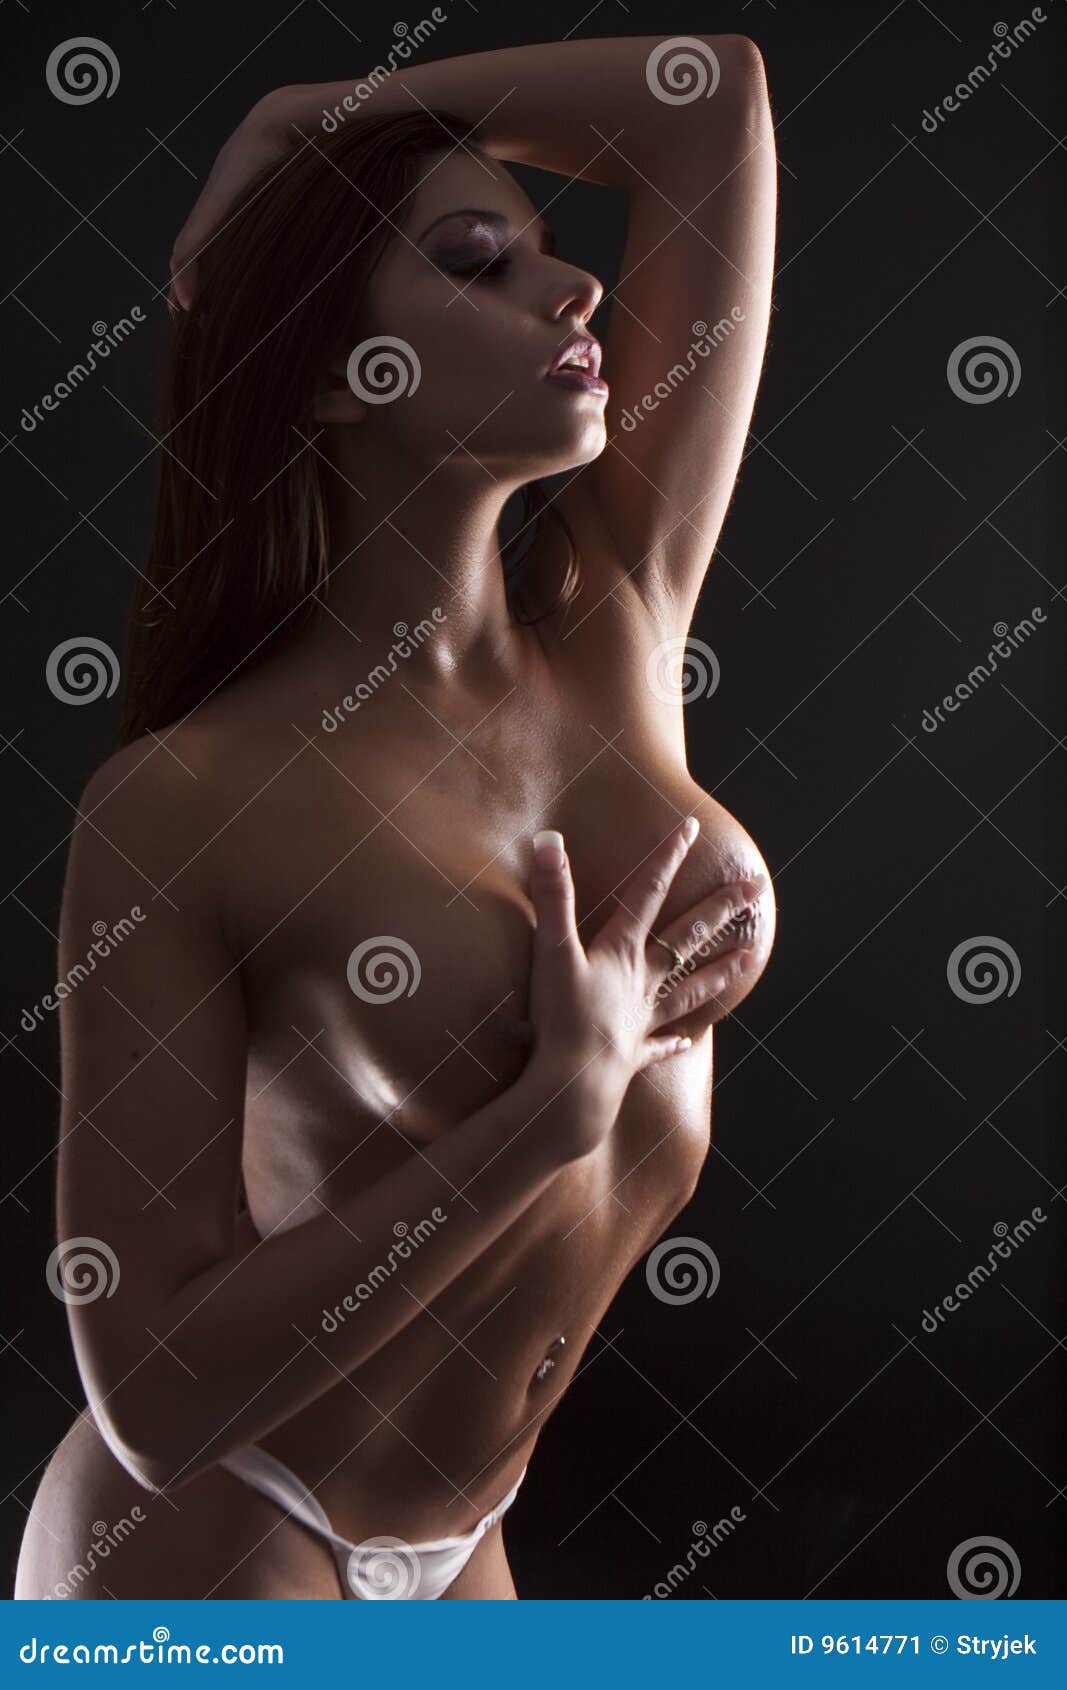 Nude Women Big Breast 4